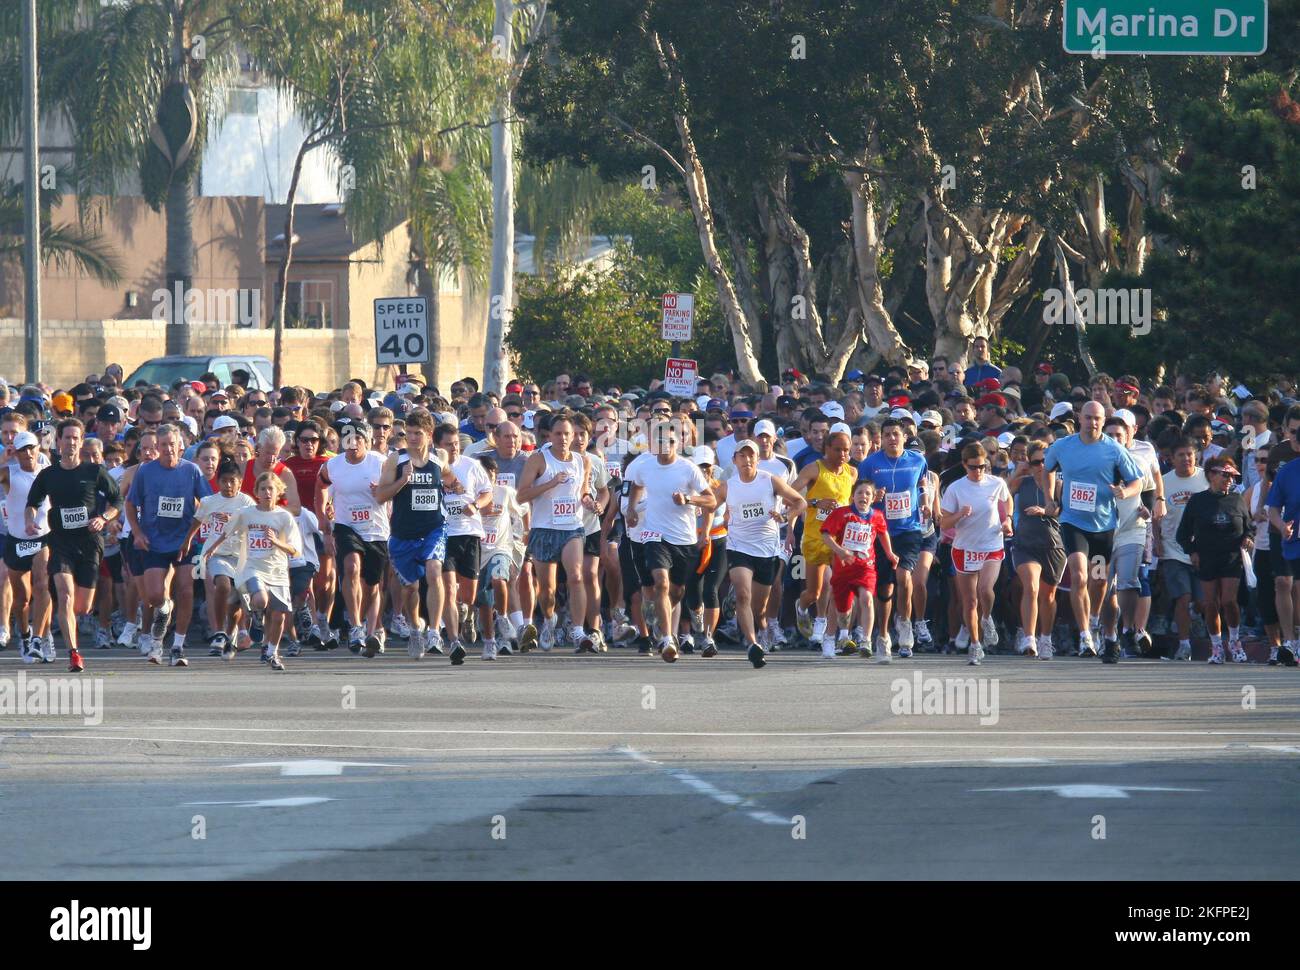 The start of a 5K fun run in Seal Beach California USA Stock Photo